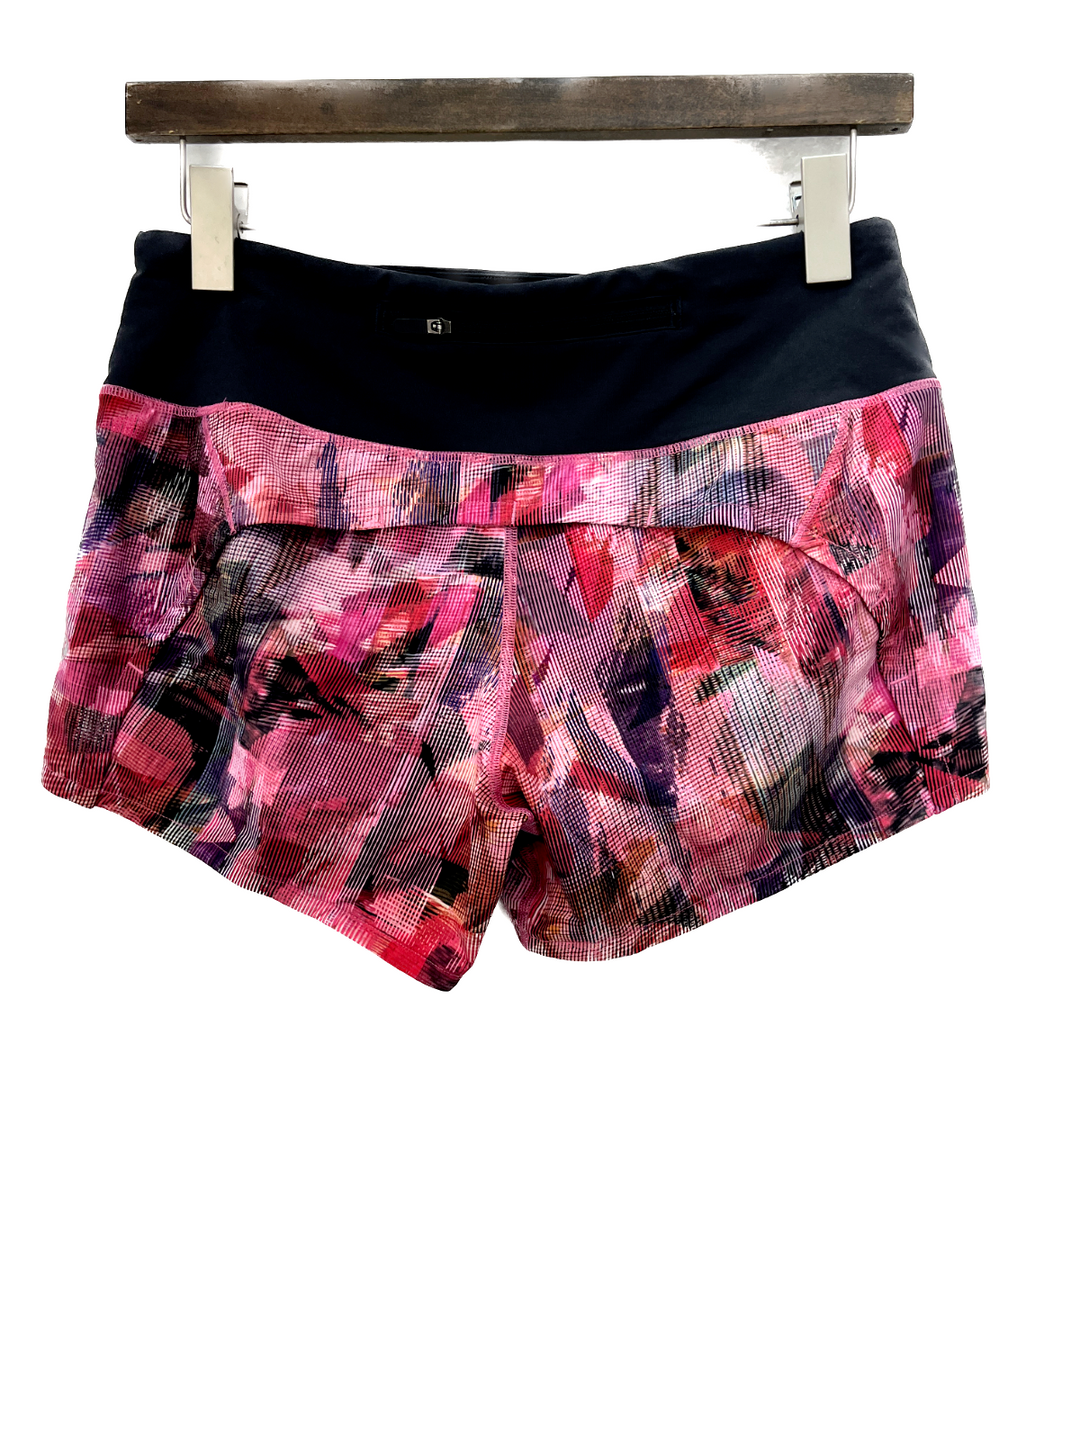 Lululemon Abstract Print Pink Mini Shorts Size 4